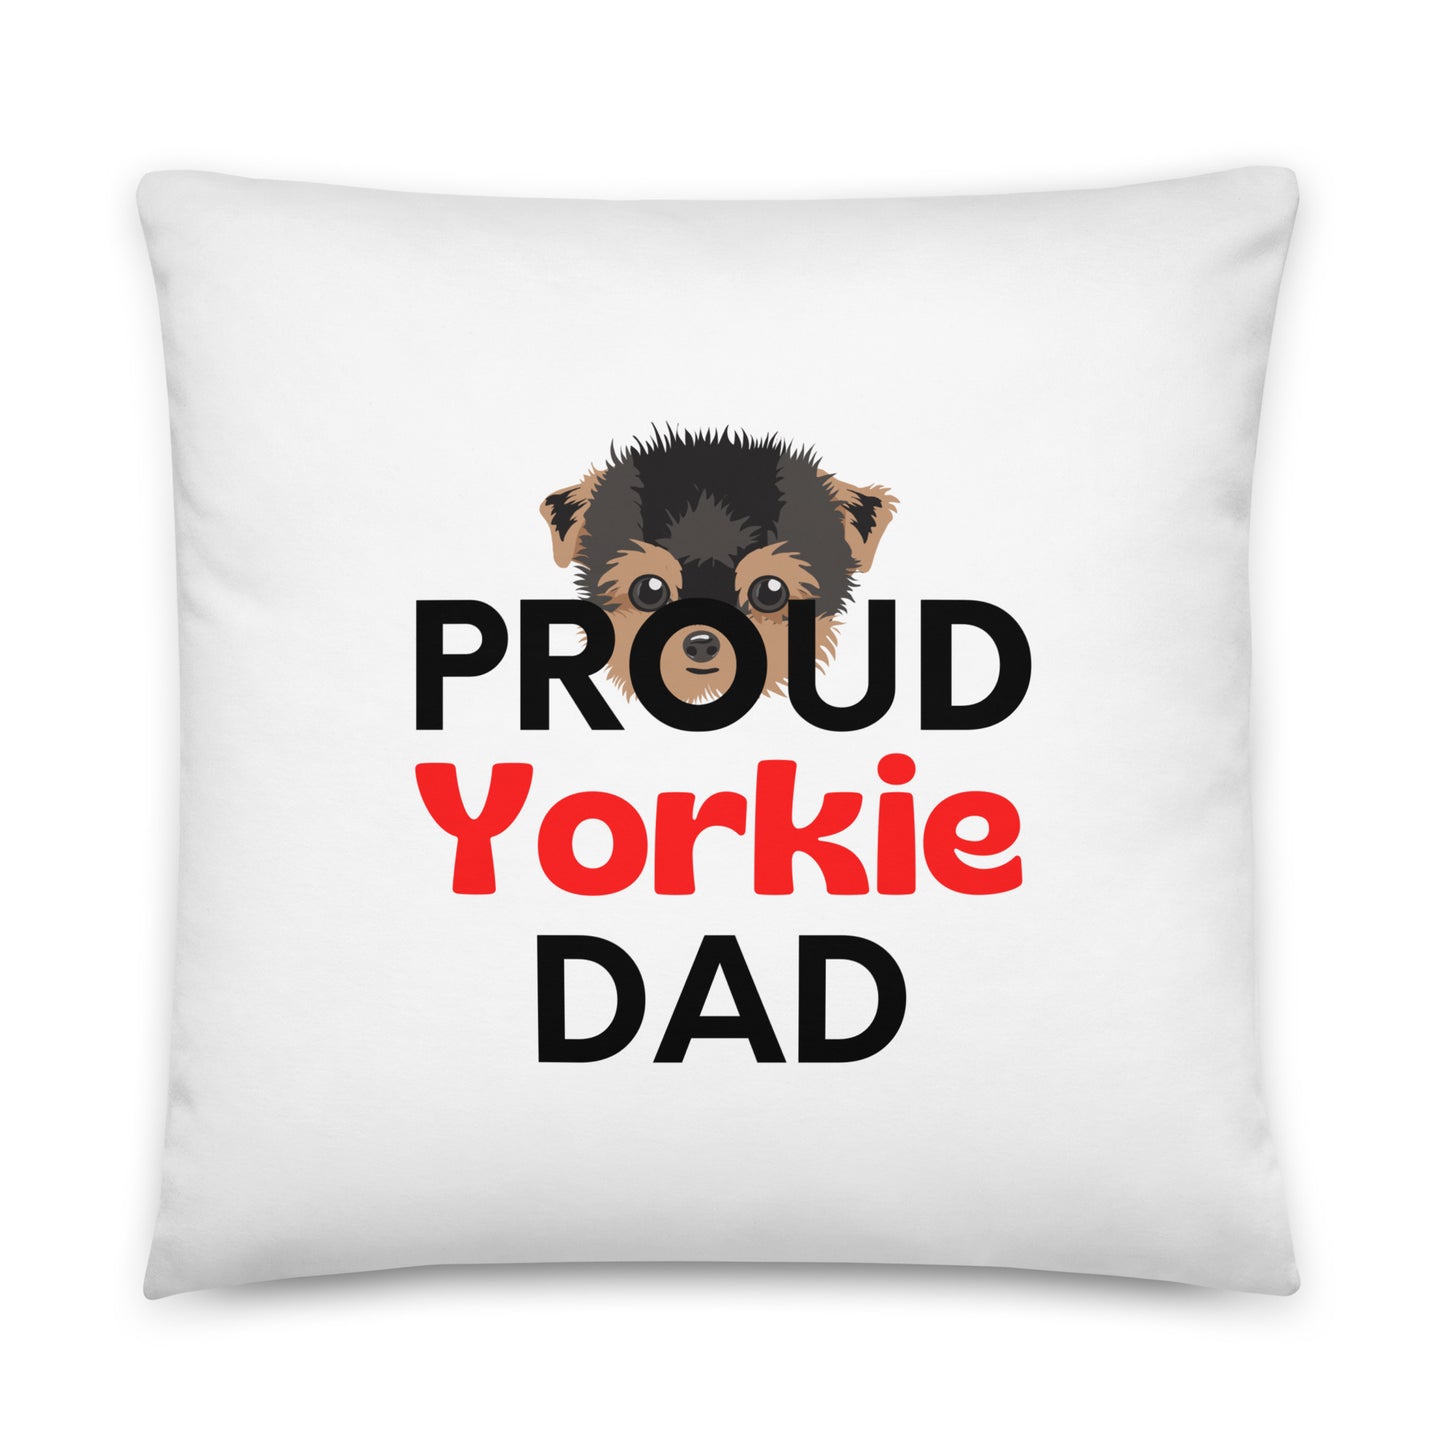 White Pillow 'PROUD Yorkie DAD'